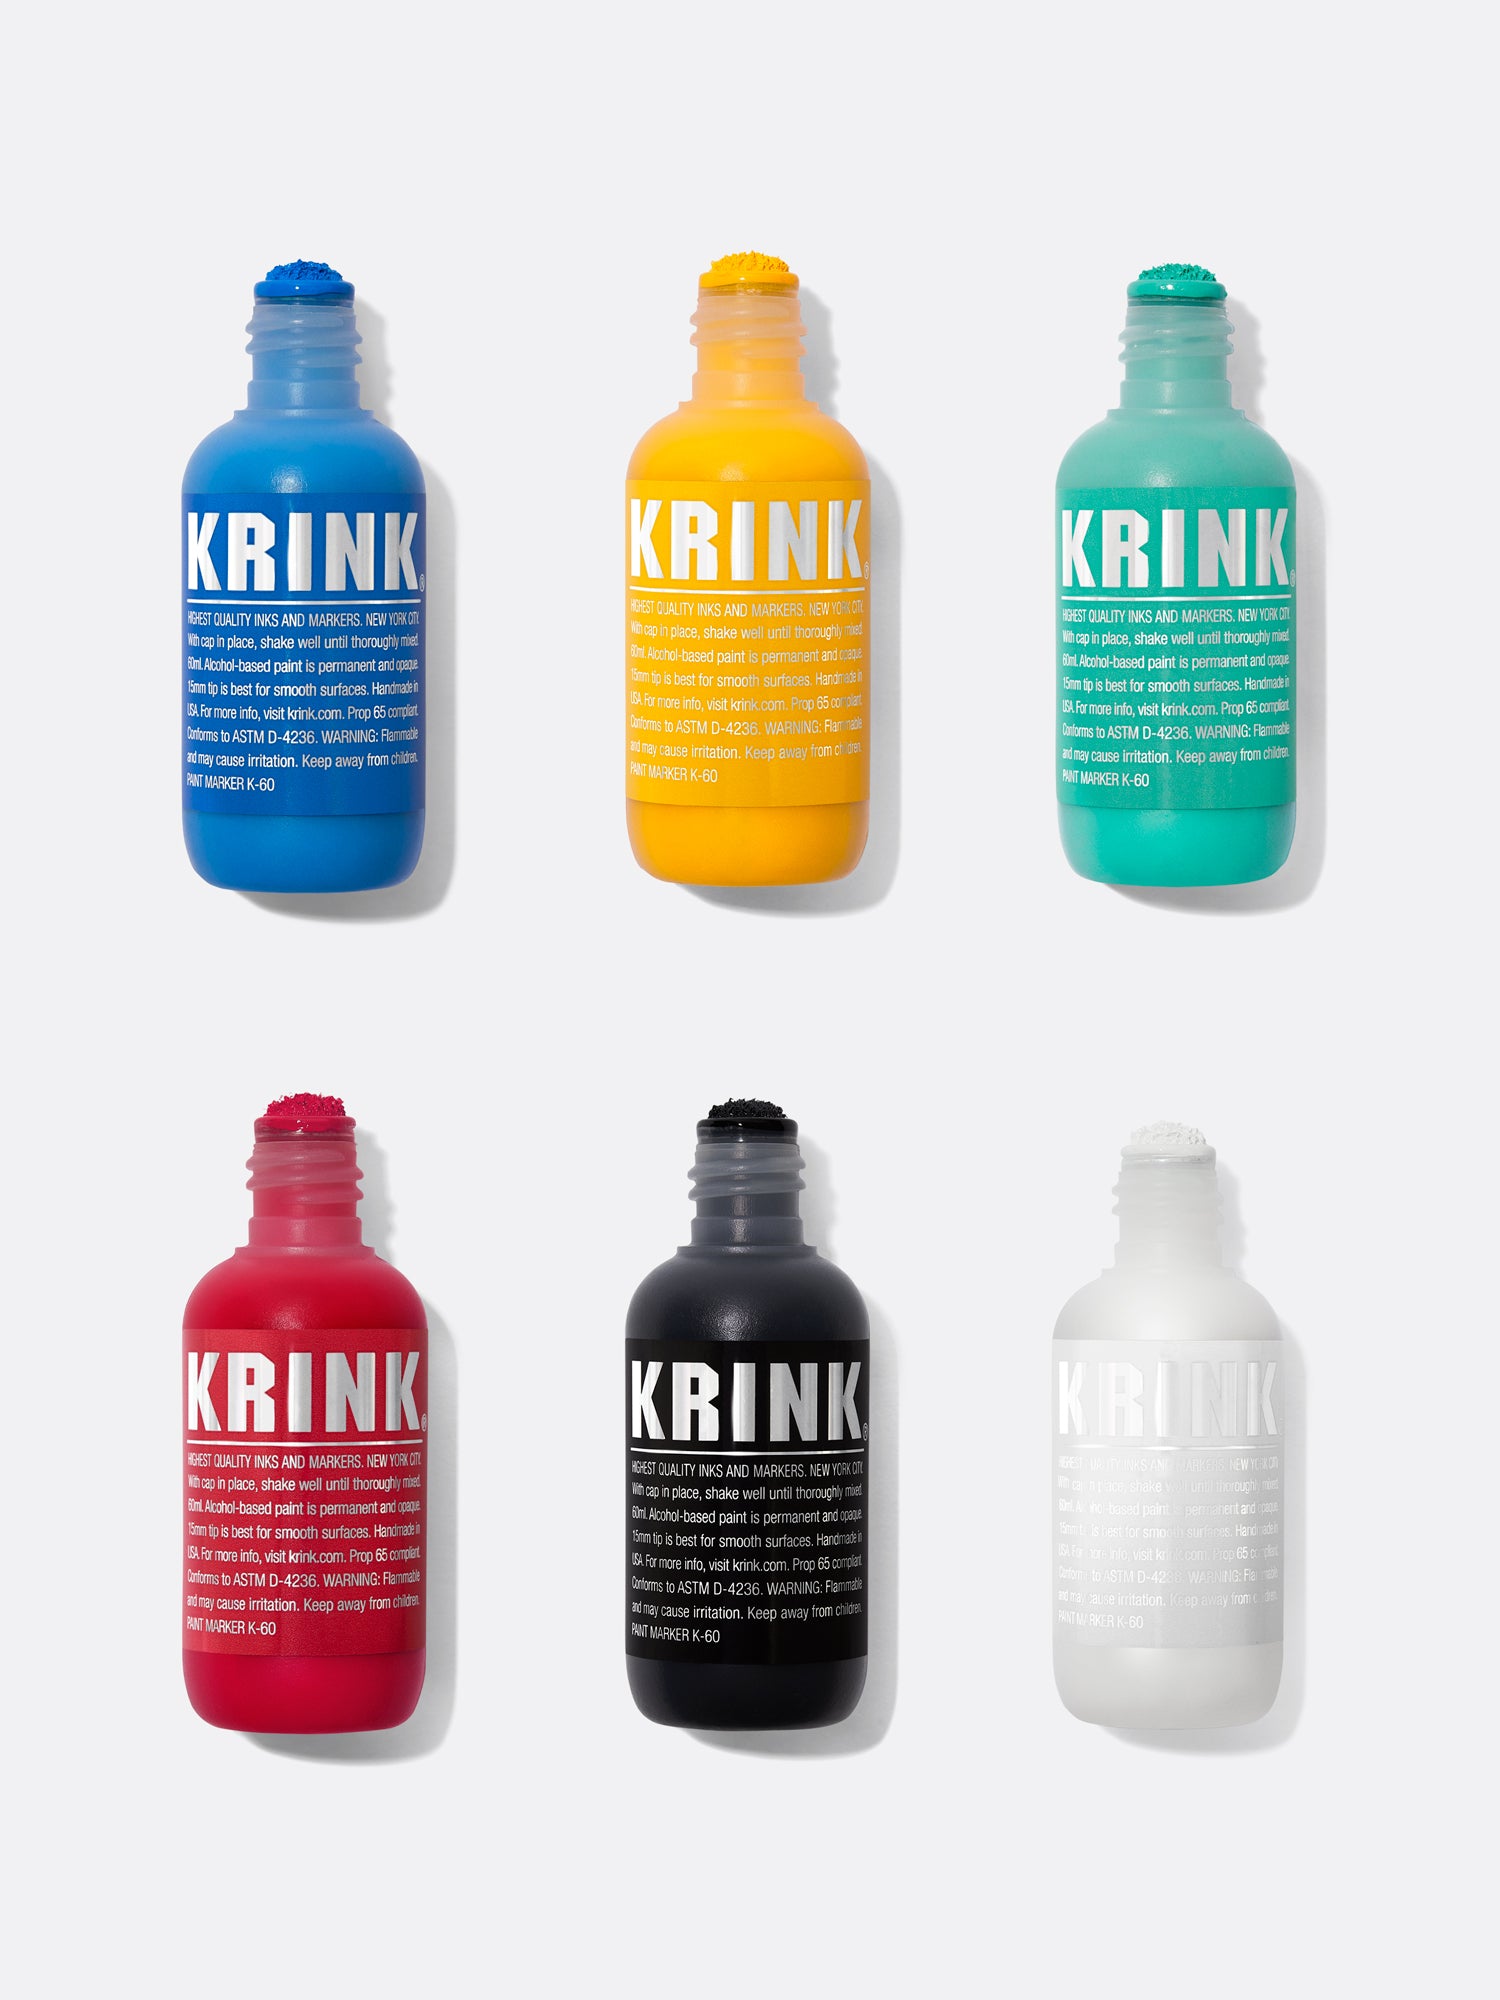 Krink - K-60 Opaque Paint Marker - Silver - Sam Flax Atlanta